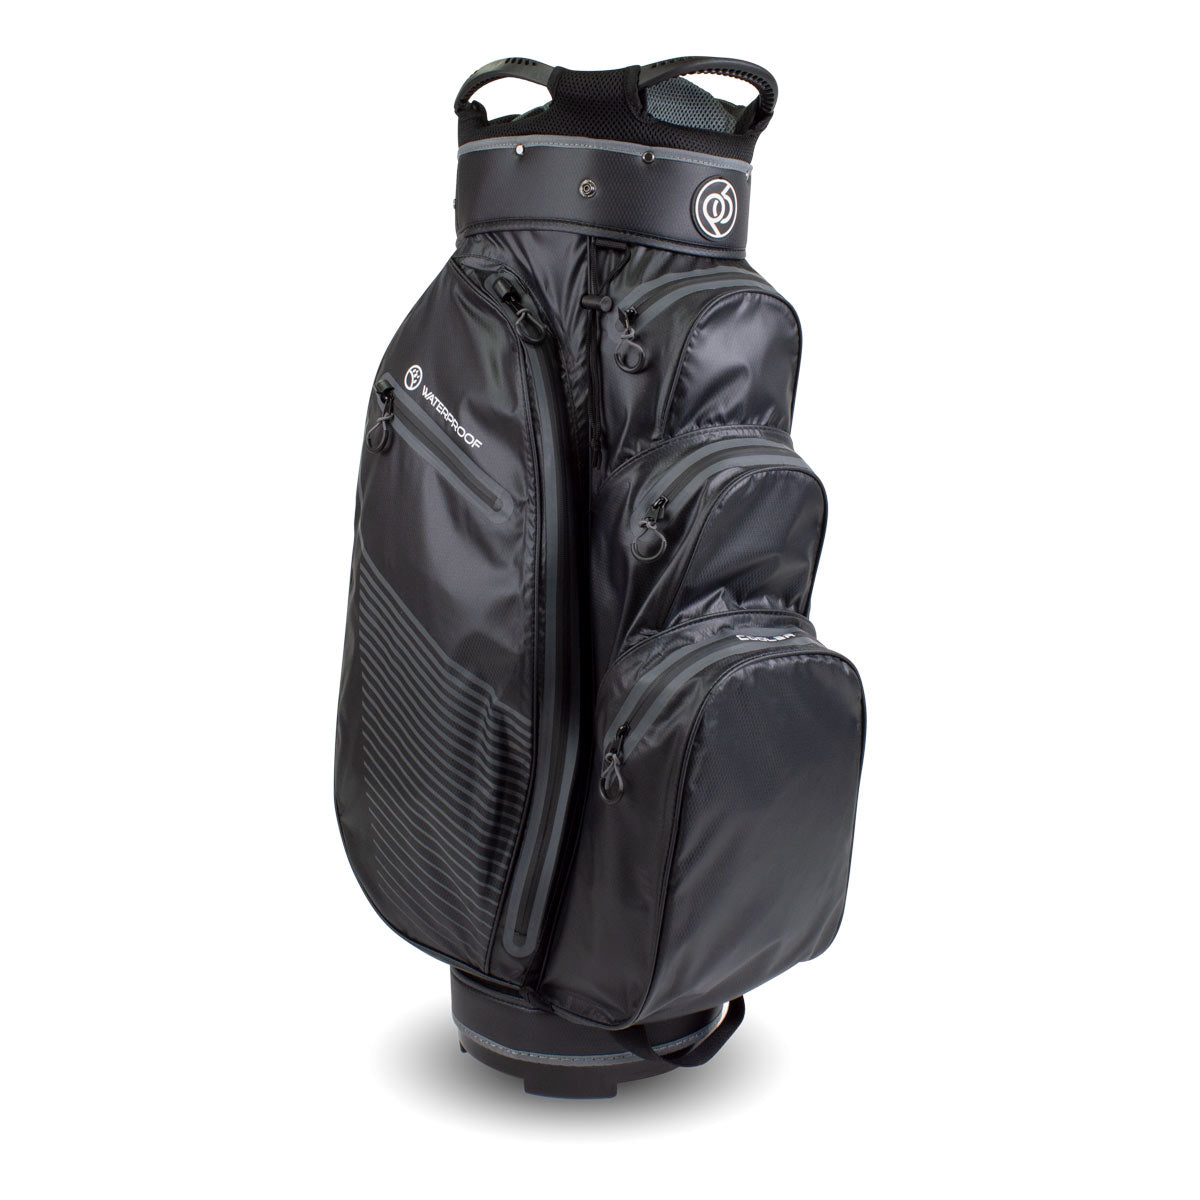 PowerBug Waterproof Cart Bag - Black/Charcoal - ElectricTrolleys.com